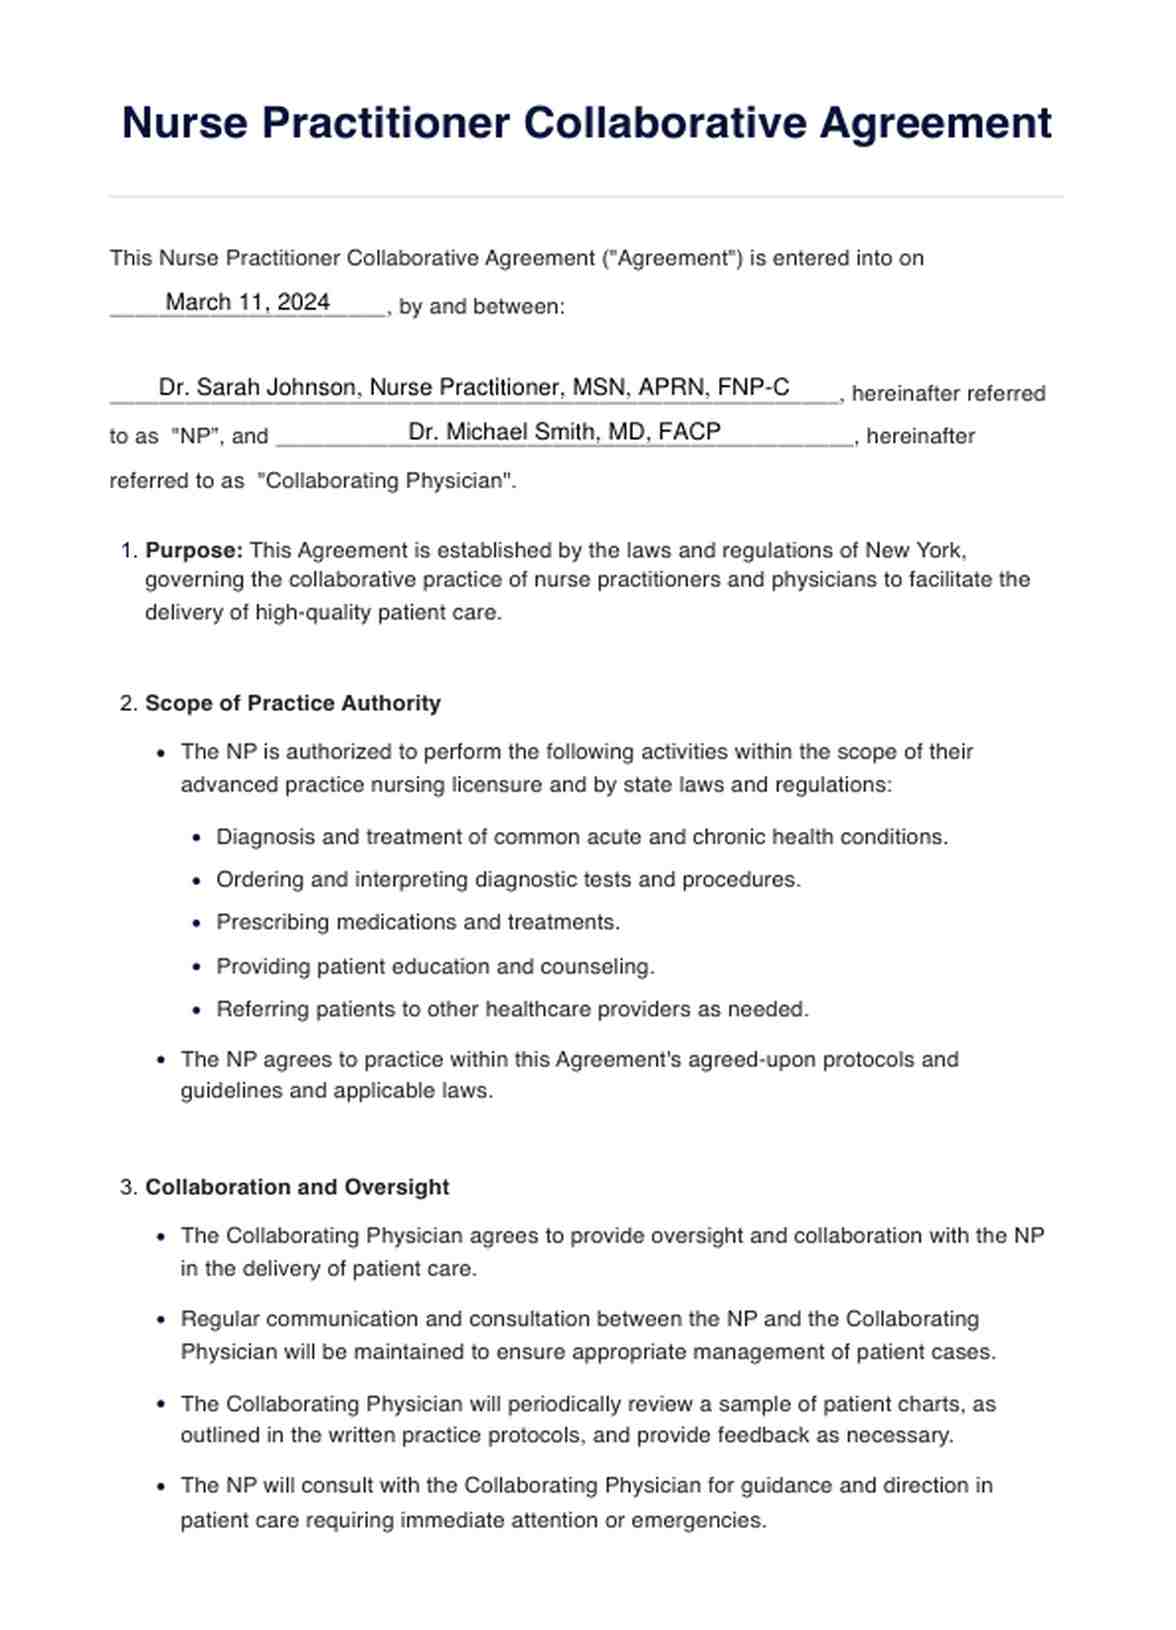 Nurse Practitioner Collaborative Agreement Template PDF Example